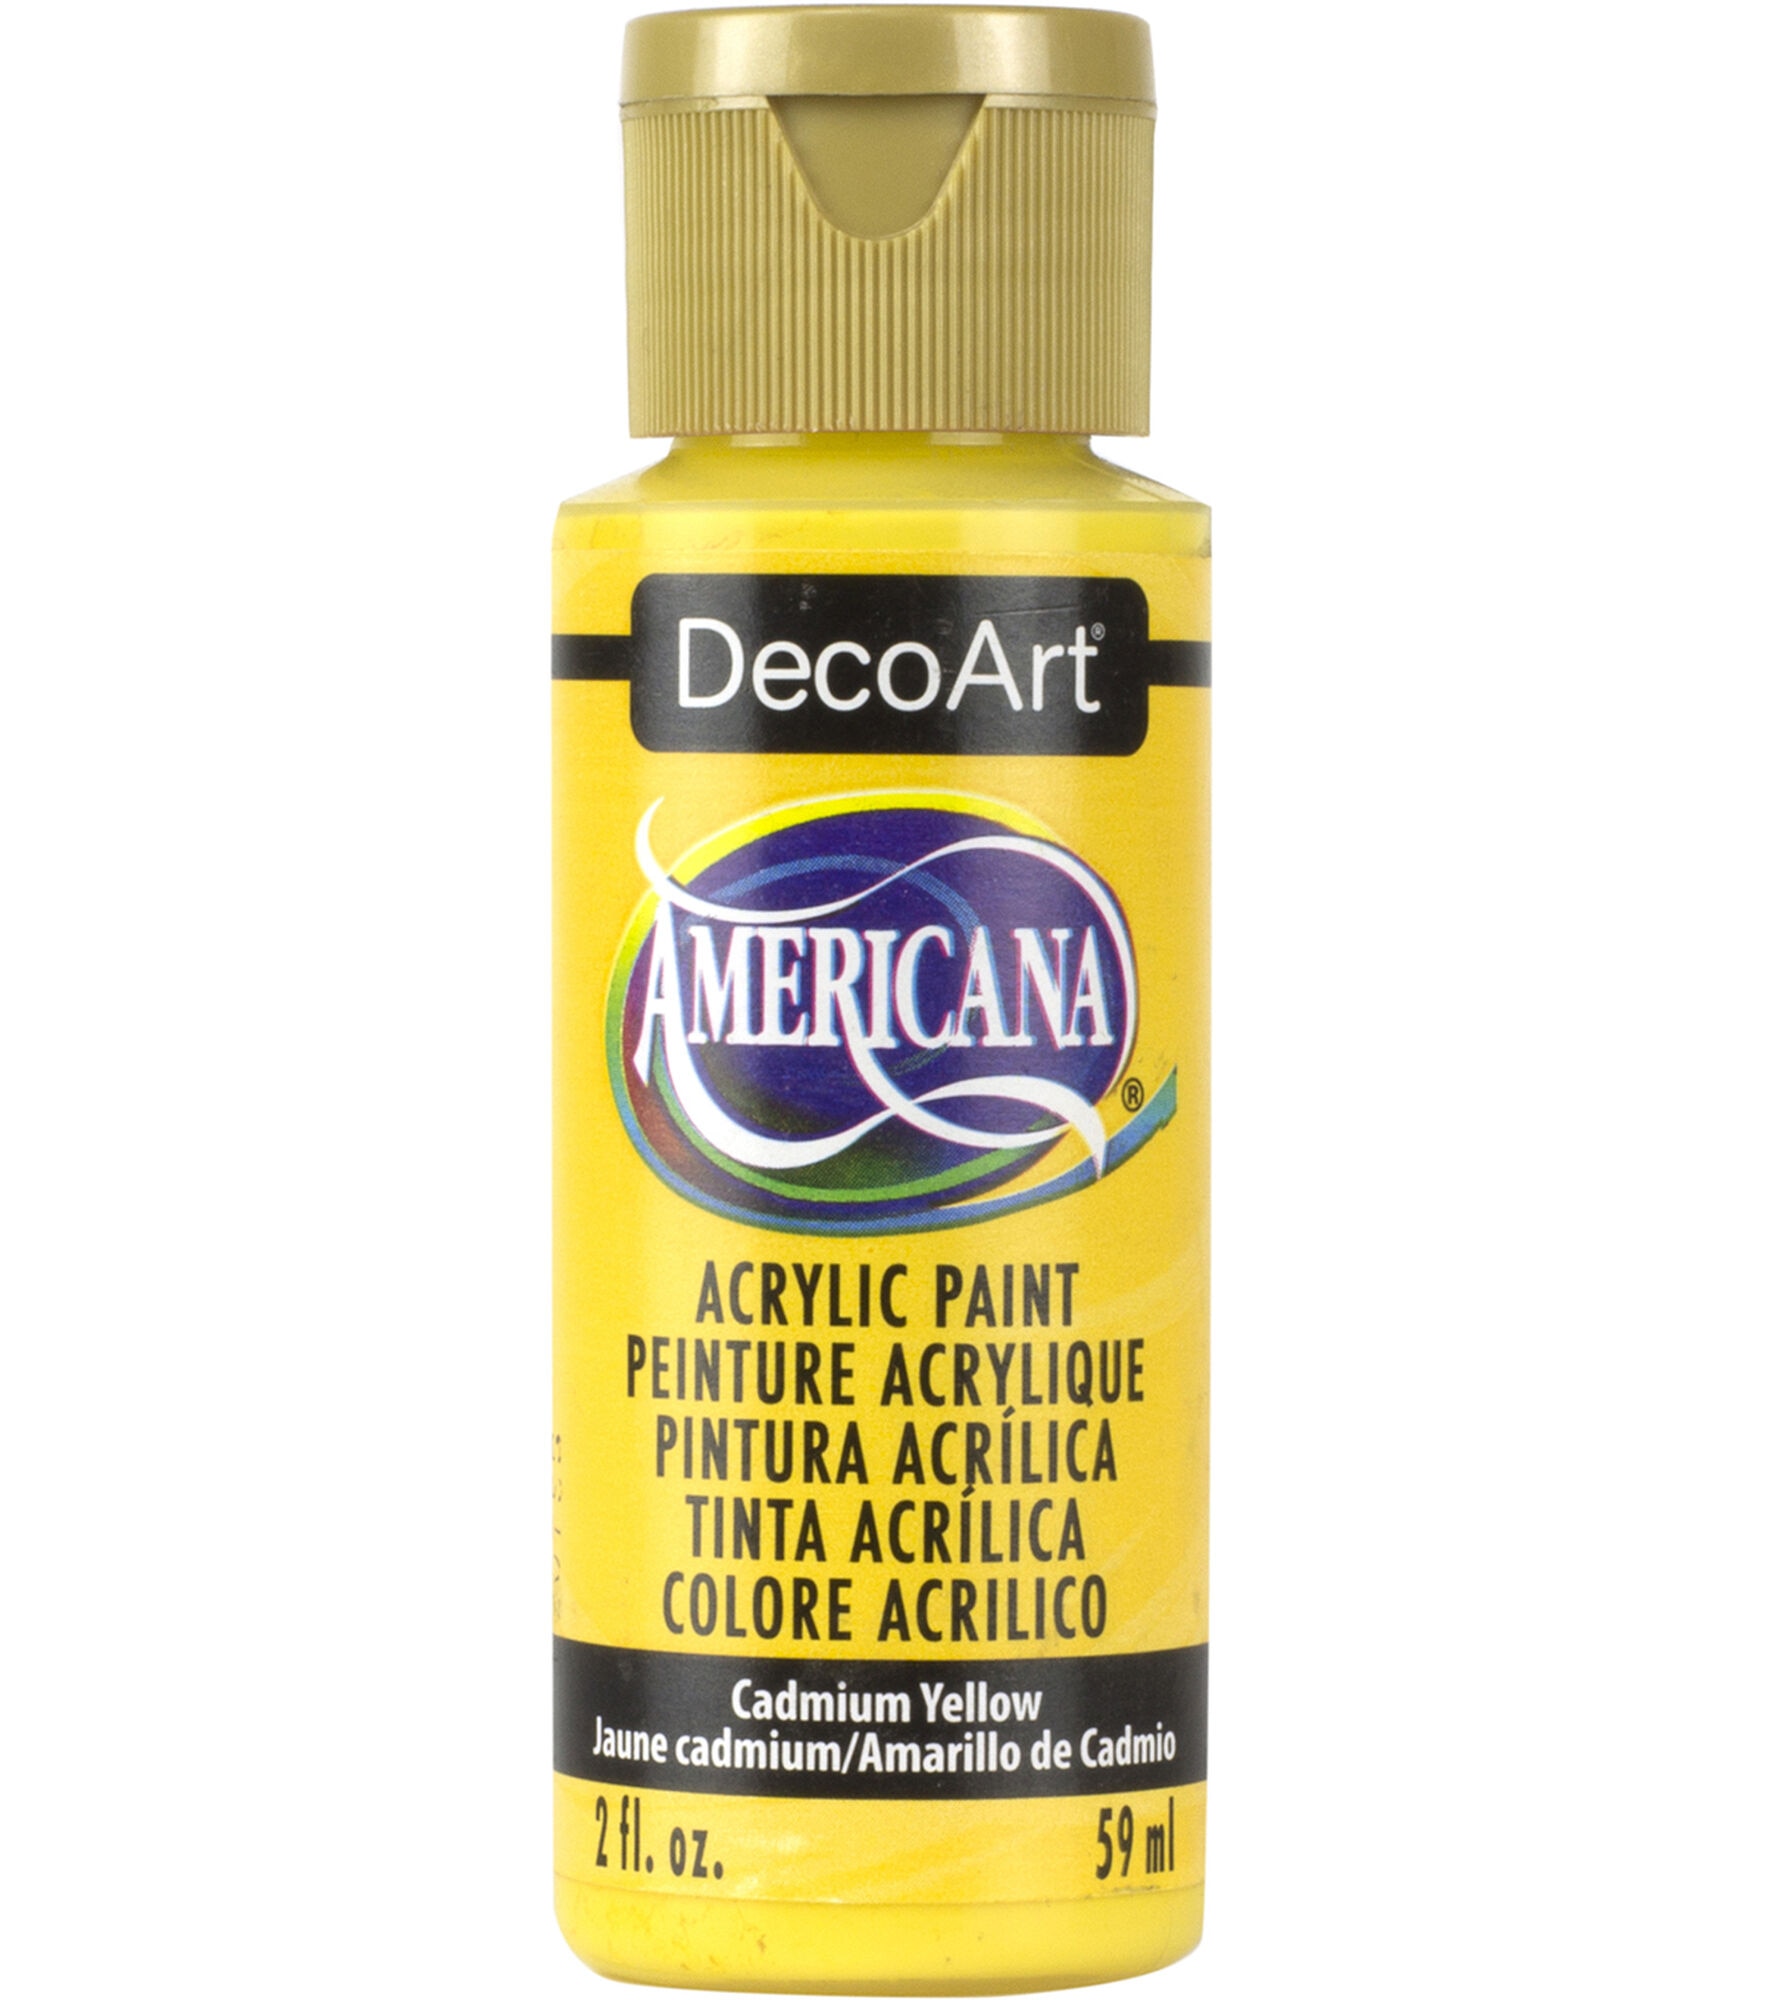 DecoArt Americana Acrylic 2oz Paint, Cadmium Yellow, hi-res